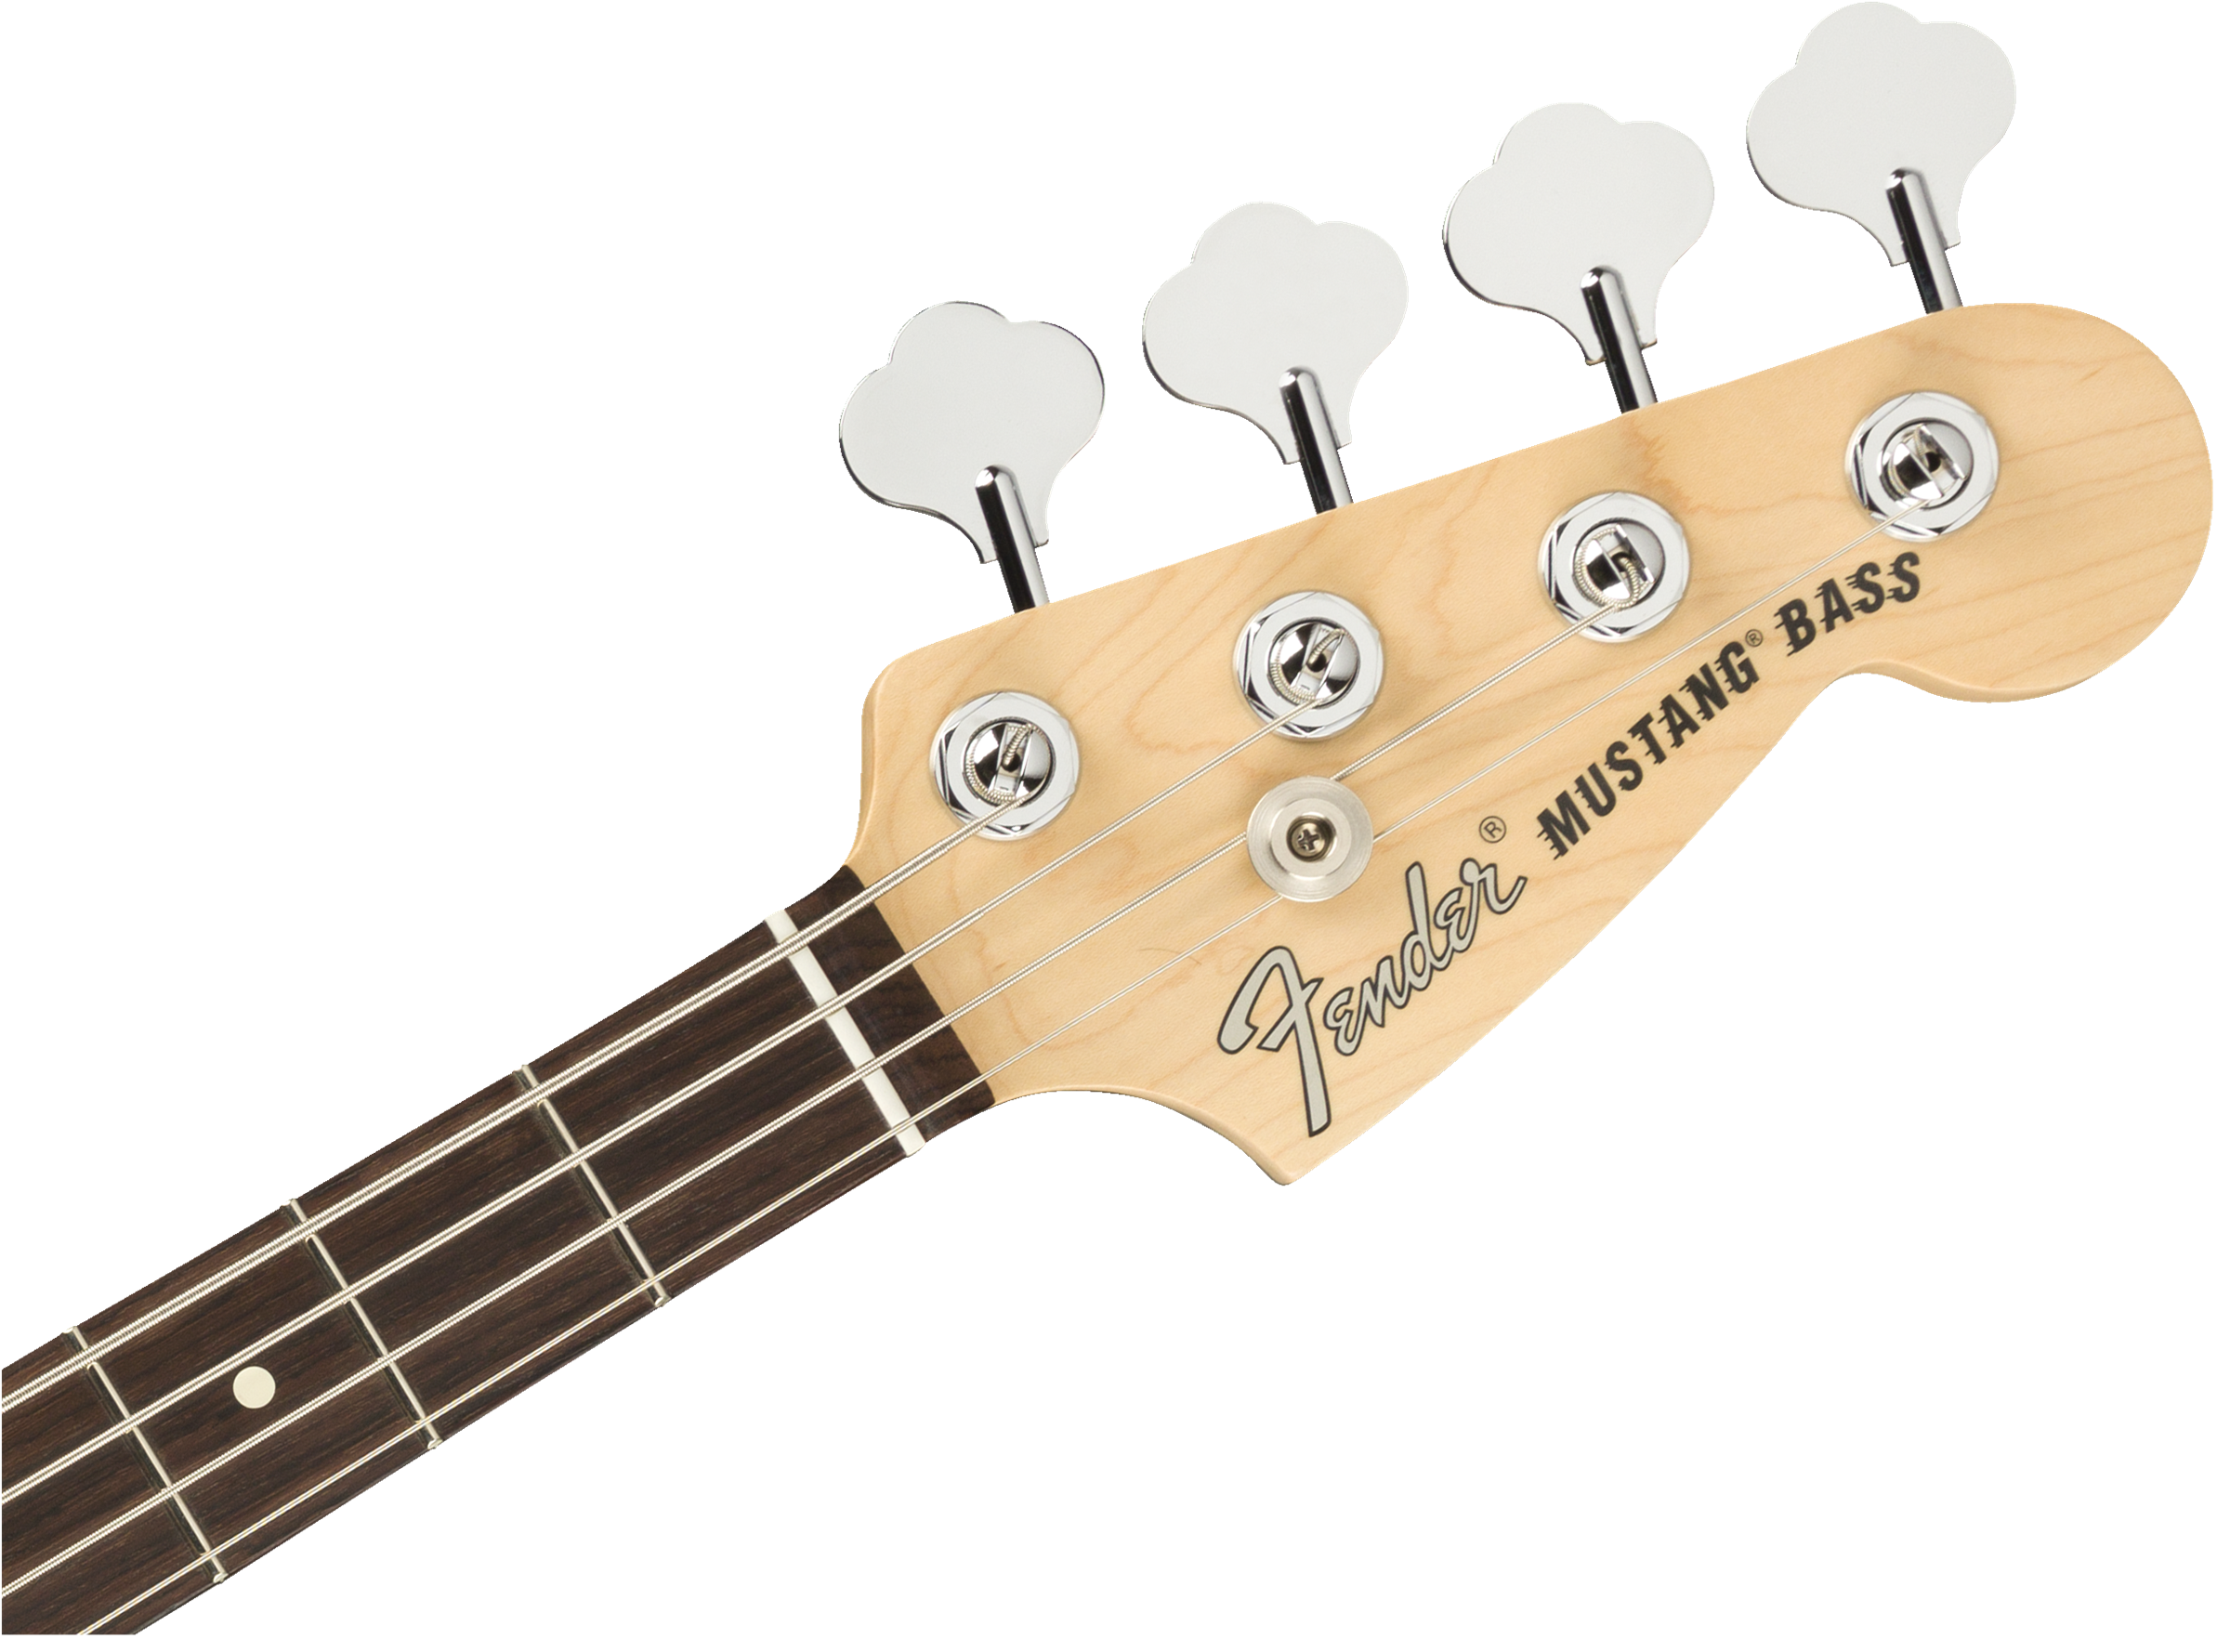 Fender American Performer Mustang Bass Rosewood Fingerboard - 3-Color Sunburst 0198620300